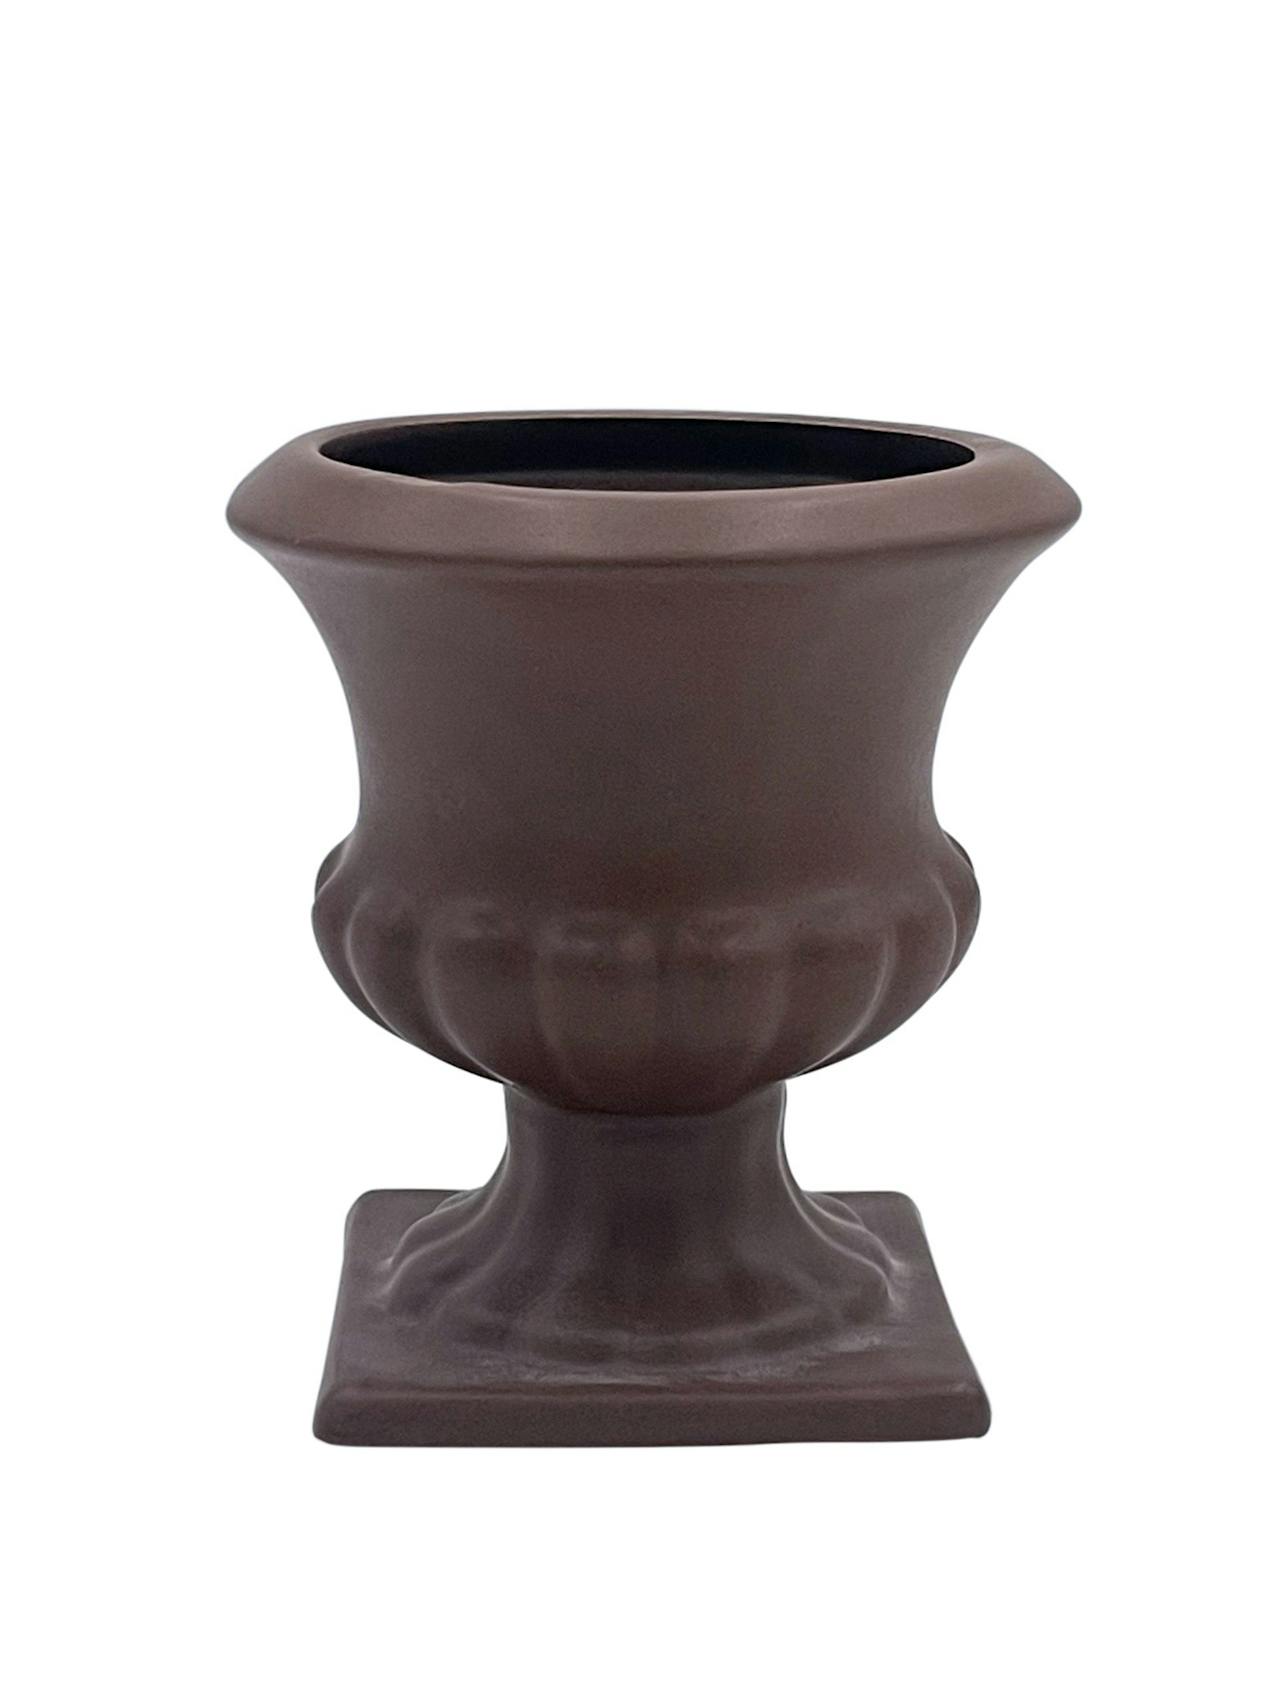 Fluted vase in brown